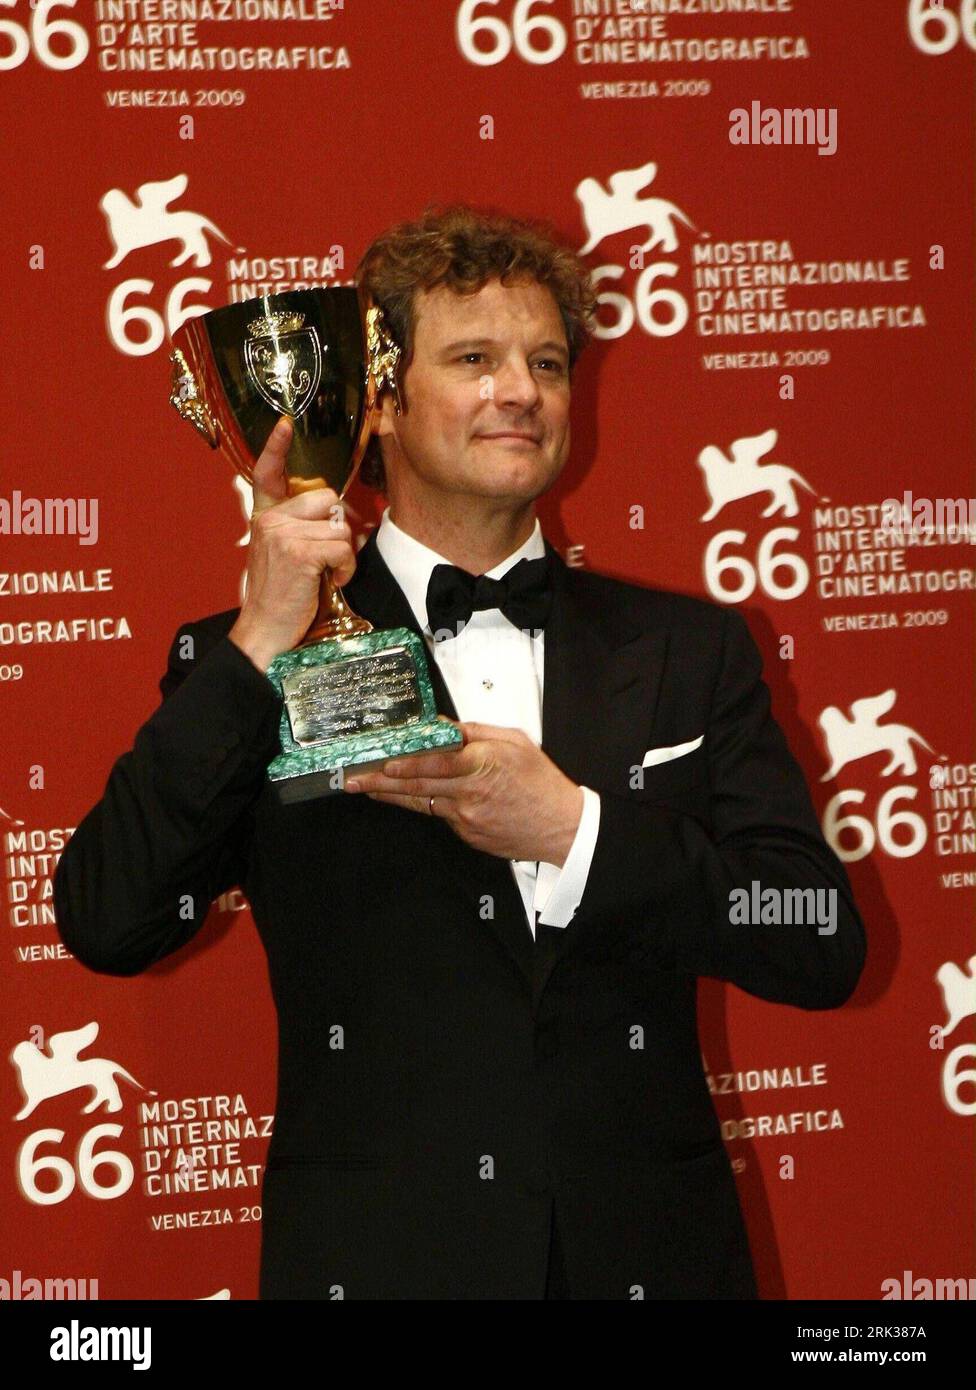 Bildnummer: 53351392  Datum: 12.09.2009  Copyright: imago/Xinhua (090913) -- VENICE, Sept. 13, 2009 (Xinhua) -- British actor Colin Firth shows the Best Actor award for his role in the film A Single Man during the 66th Venice International Film Festival at Venice Lido, Italy, on September 12, 2009. (Xinhua)(hdt) (1)ITALY-VENICE-FILM FESTIVAL-BEST ACTOR PUBLICATIONxNOTxINxCHN People Film Filmfestival Venedig o00 Biennale o00 Pressetermin Gewinner Sieger Preisverleihung Trophäe premiumd kbdig xng 2009 hoch o0 Preis o00 Preisträger  Bester Schauspieler o00 Porträt Der Einzelgänger    Bildnummer 5 Stock Photo